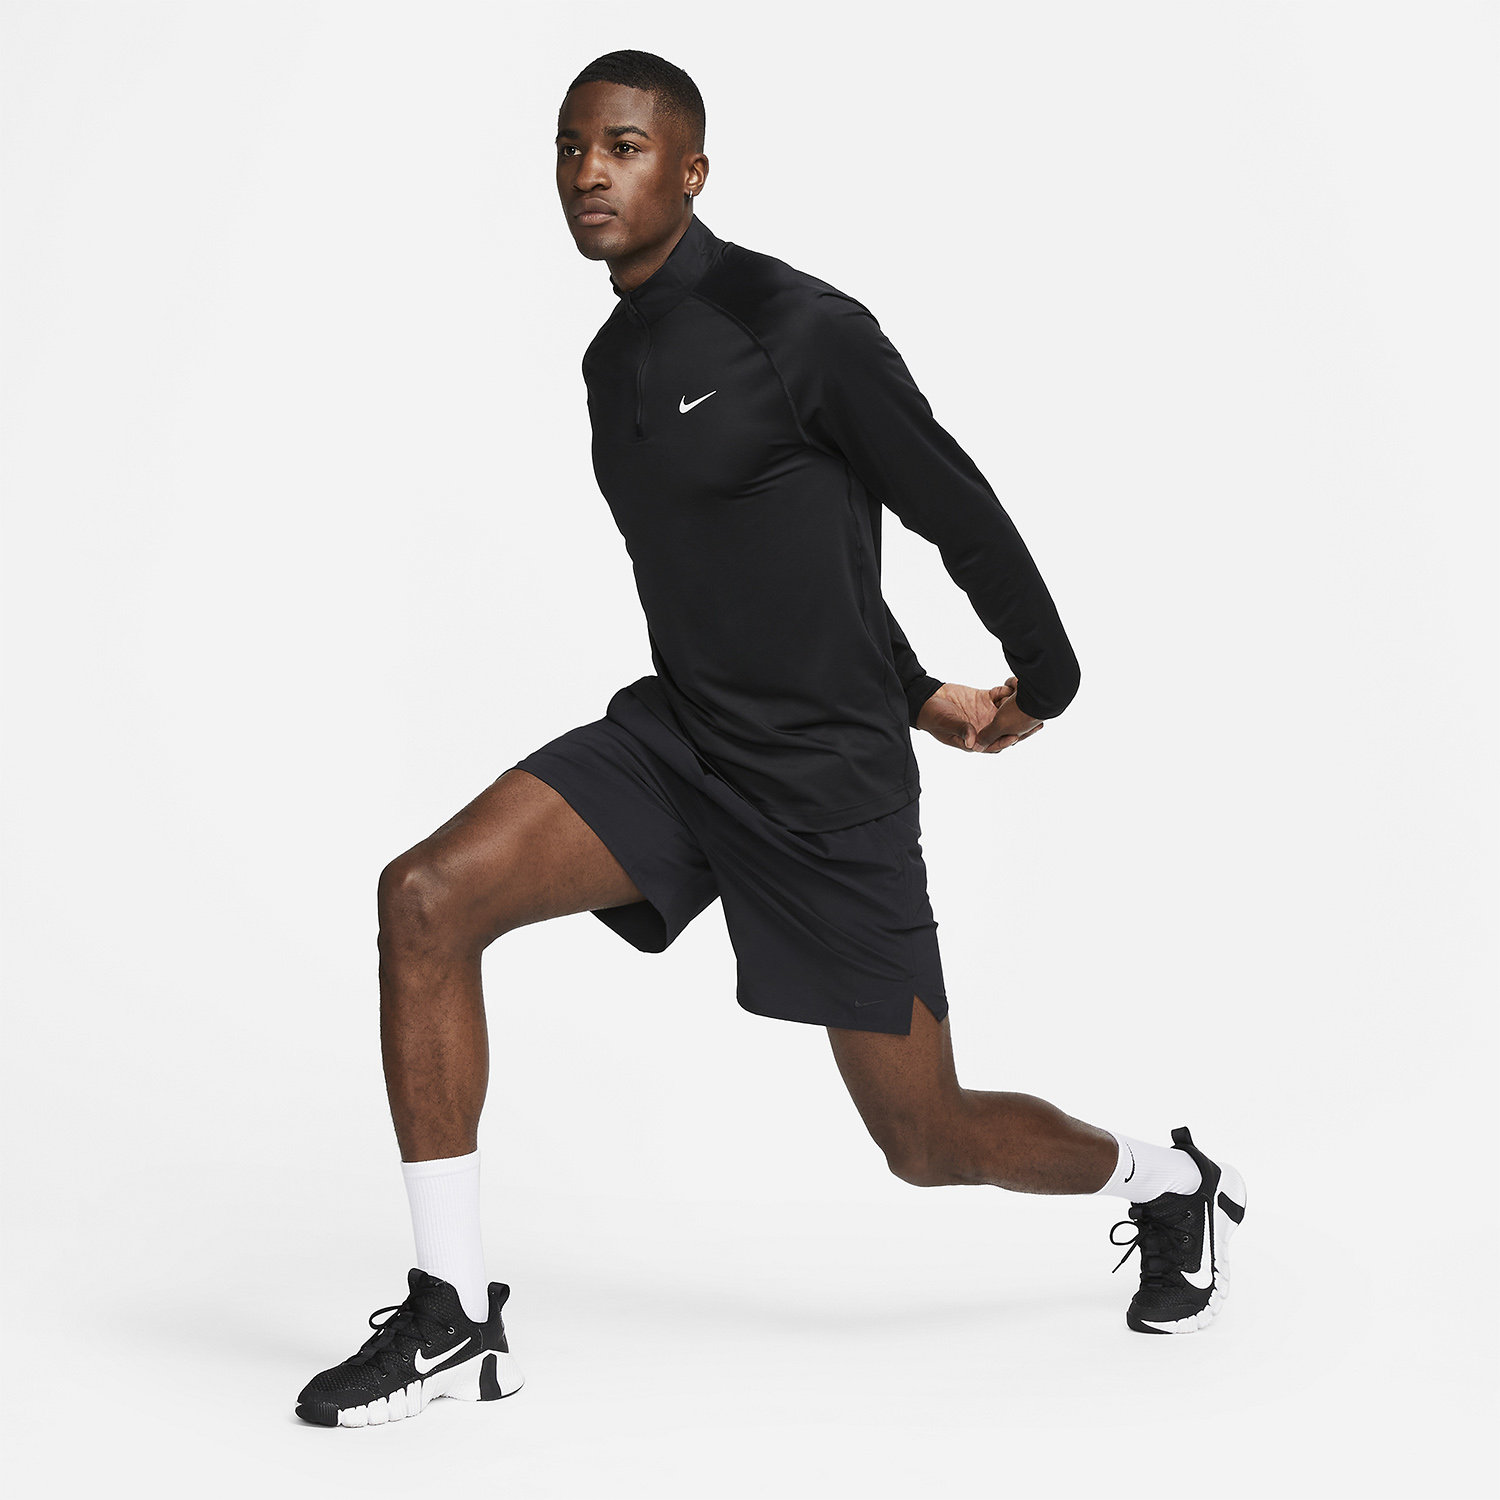 Nike Ready Maglia - Black/White